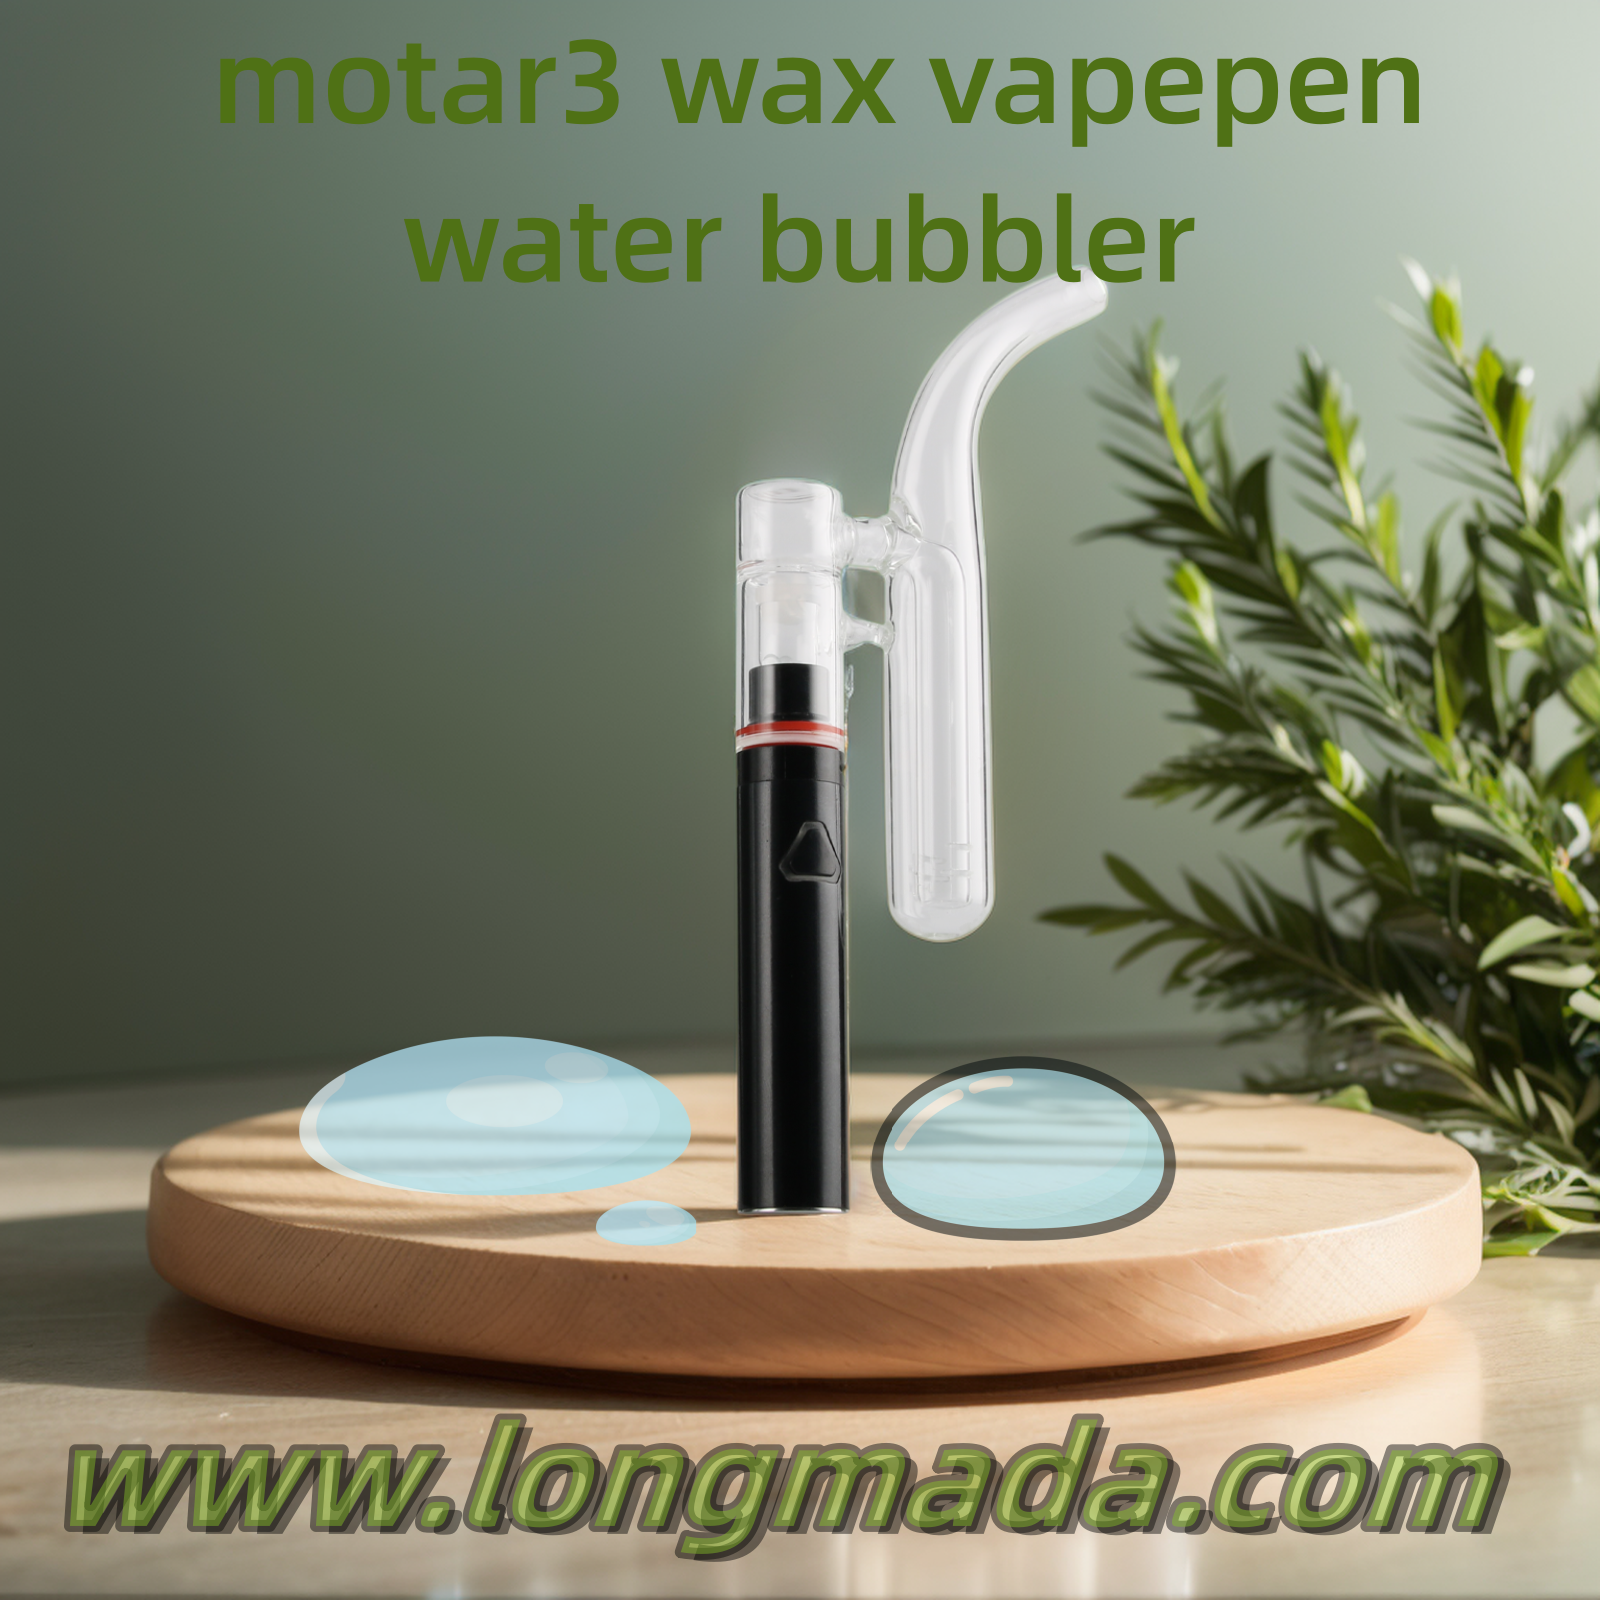 How to Use Longmada with Custom Water Glass